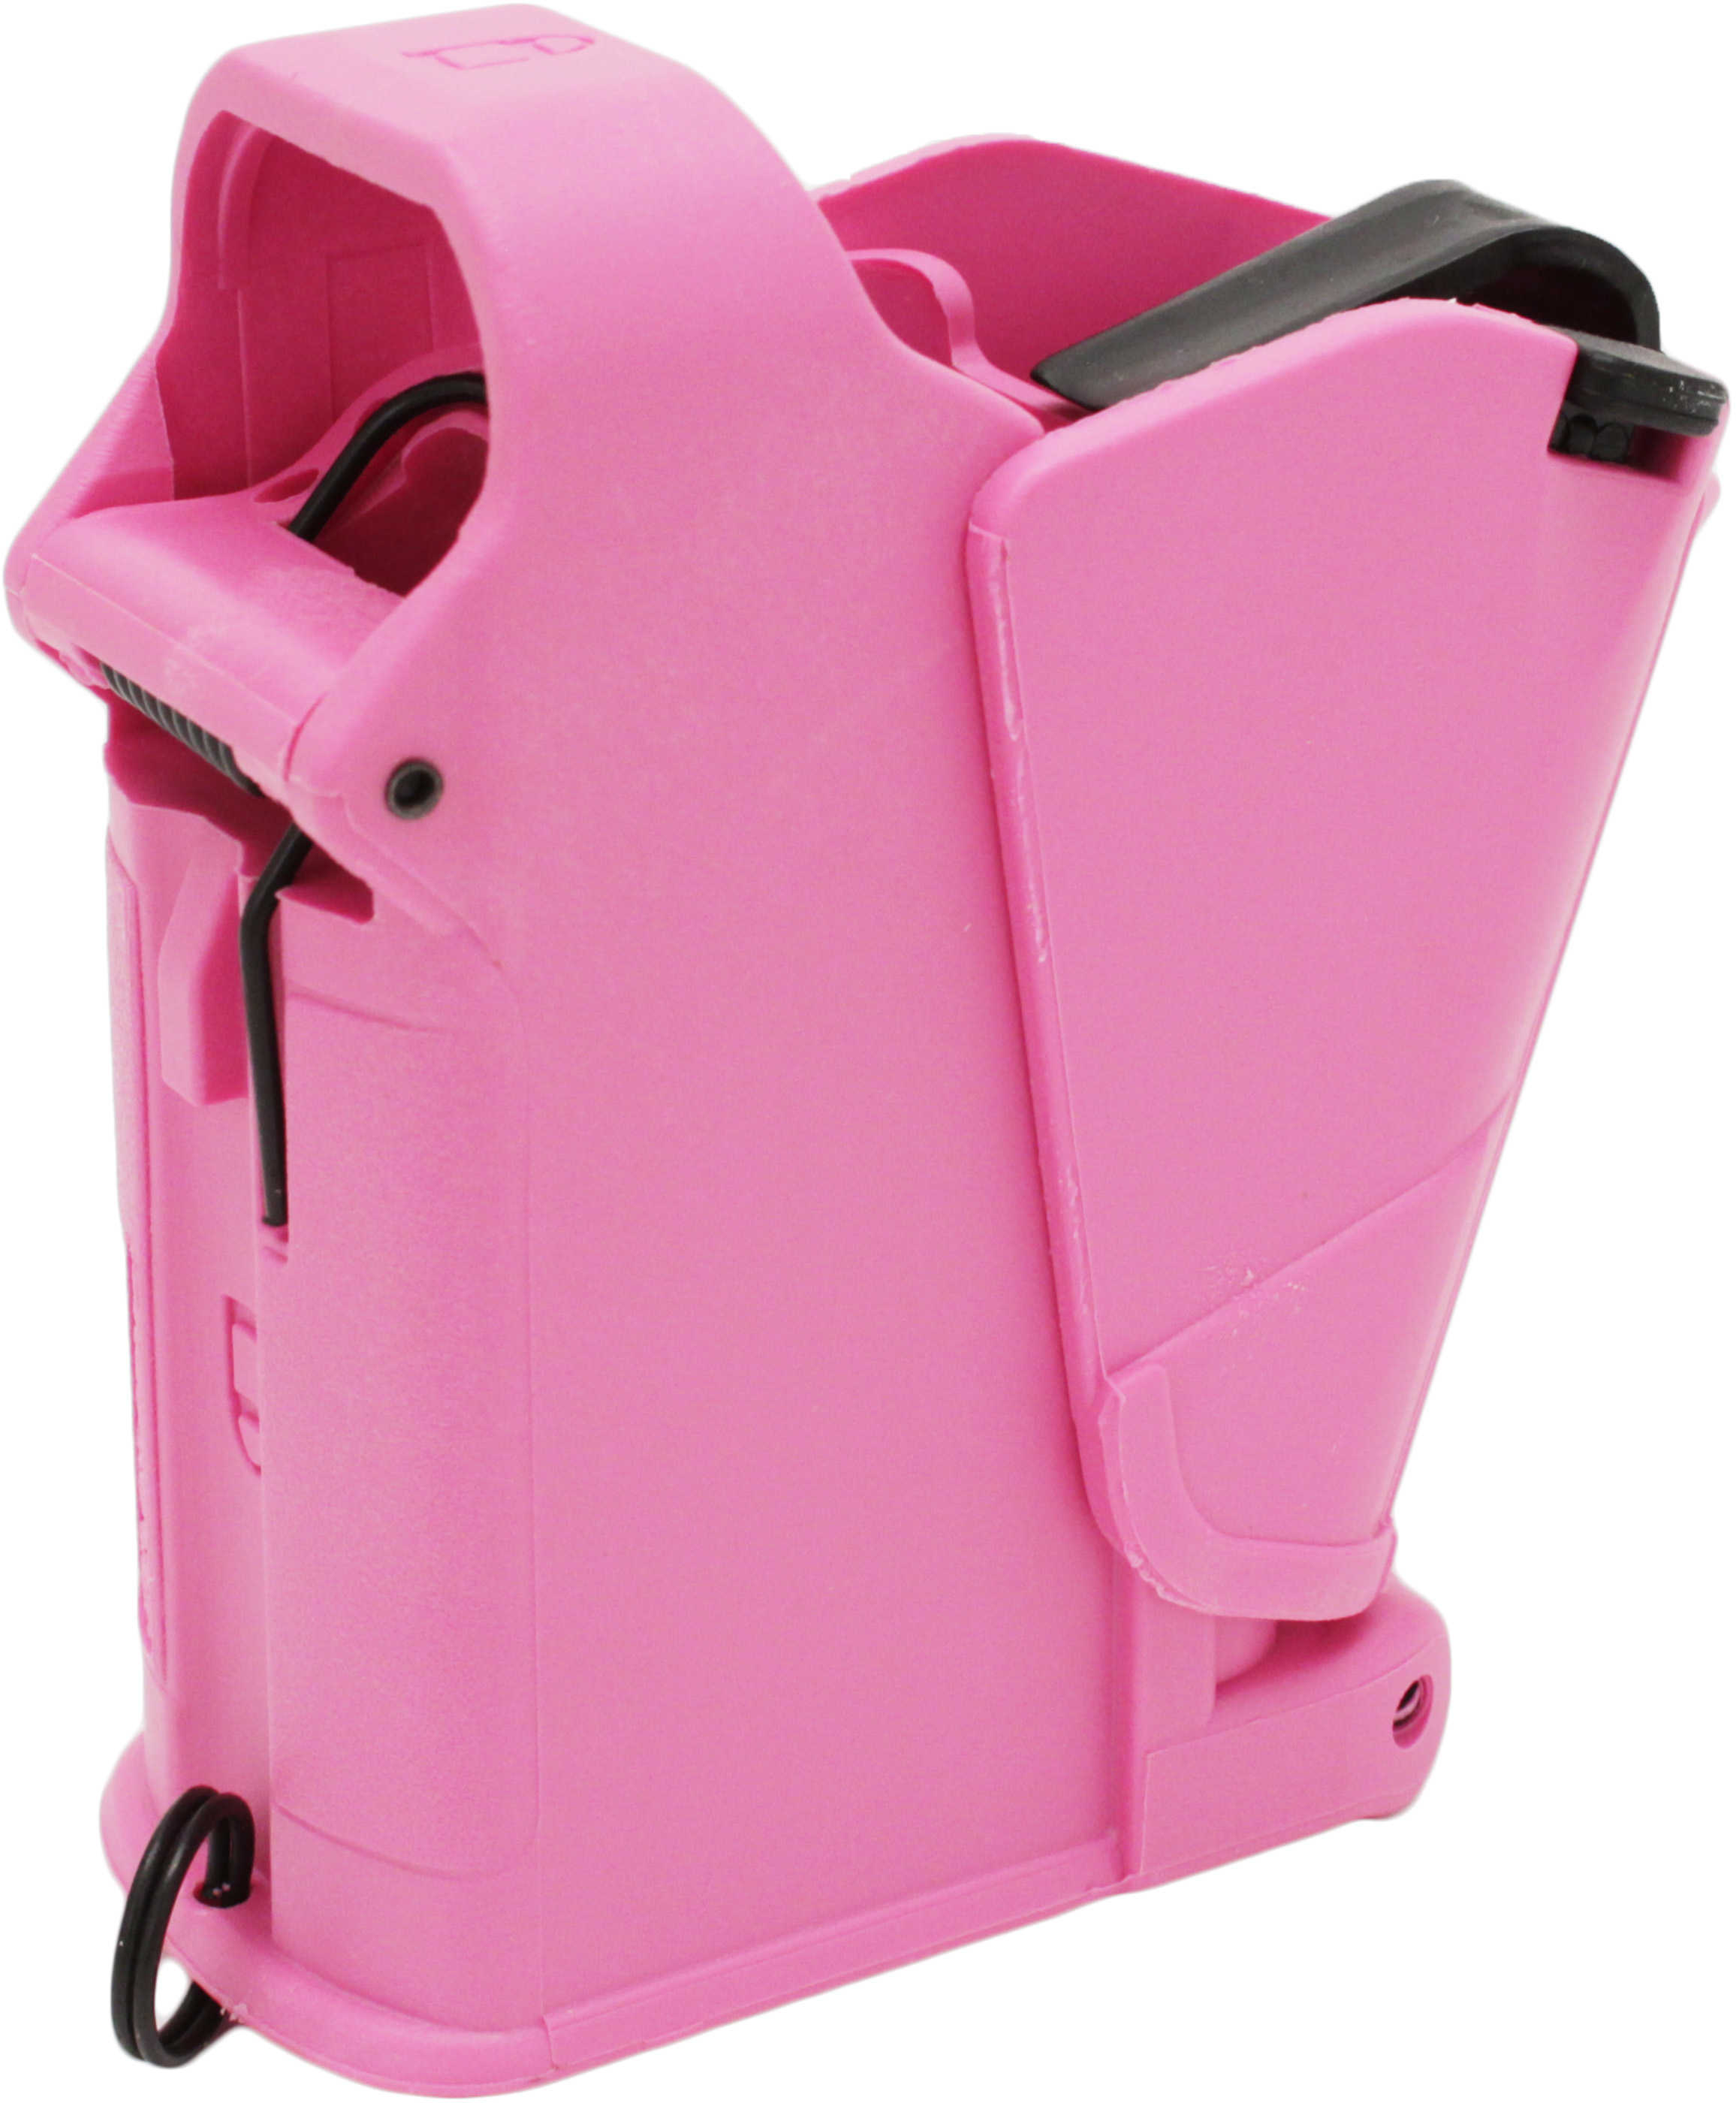 Maglula ltd. UpLula Magazine Loader/Unloader 45 ACP Fits 9mm-45 ACP Pink UP60P